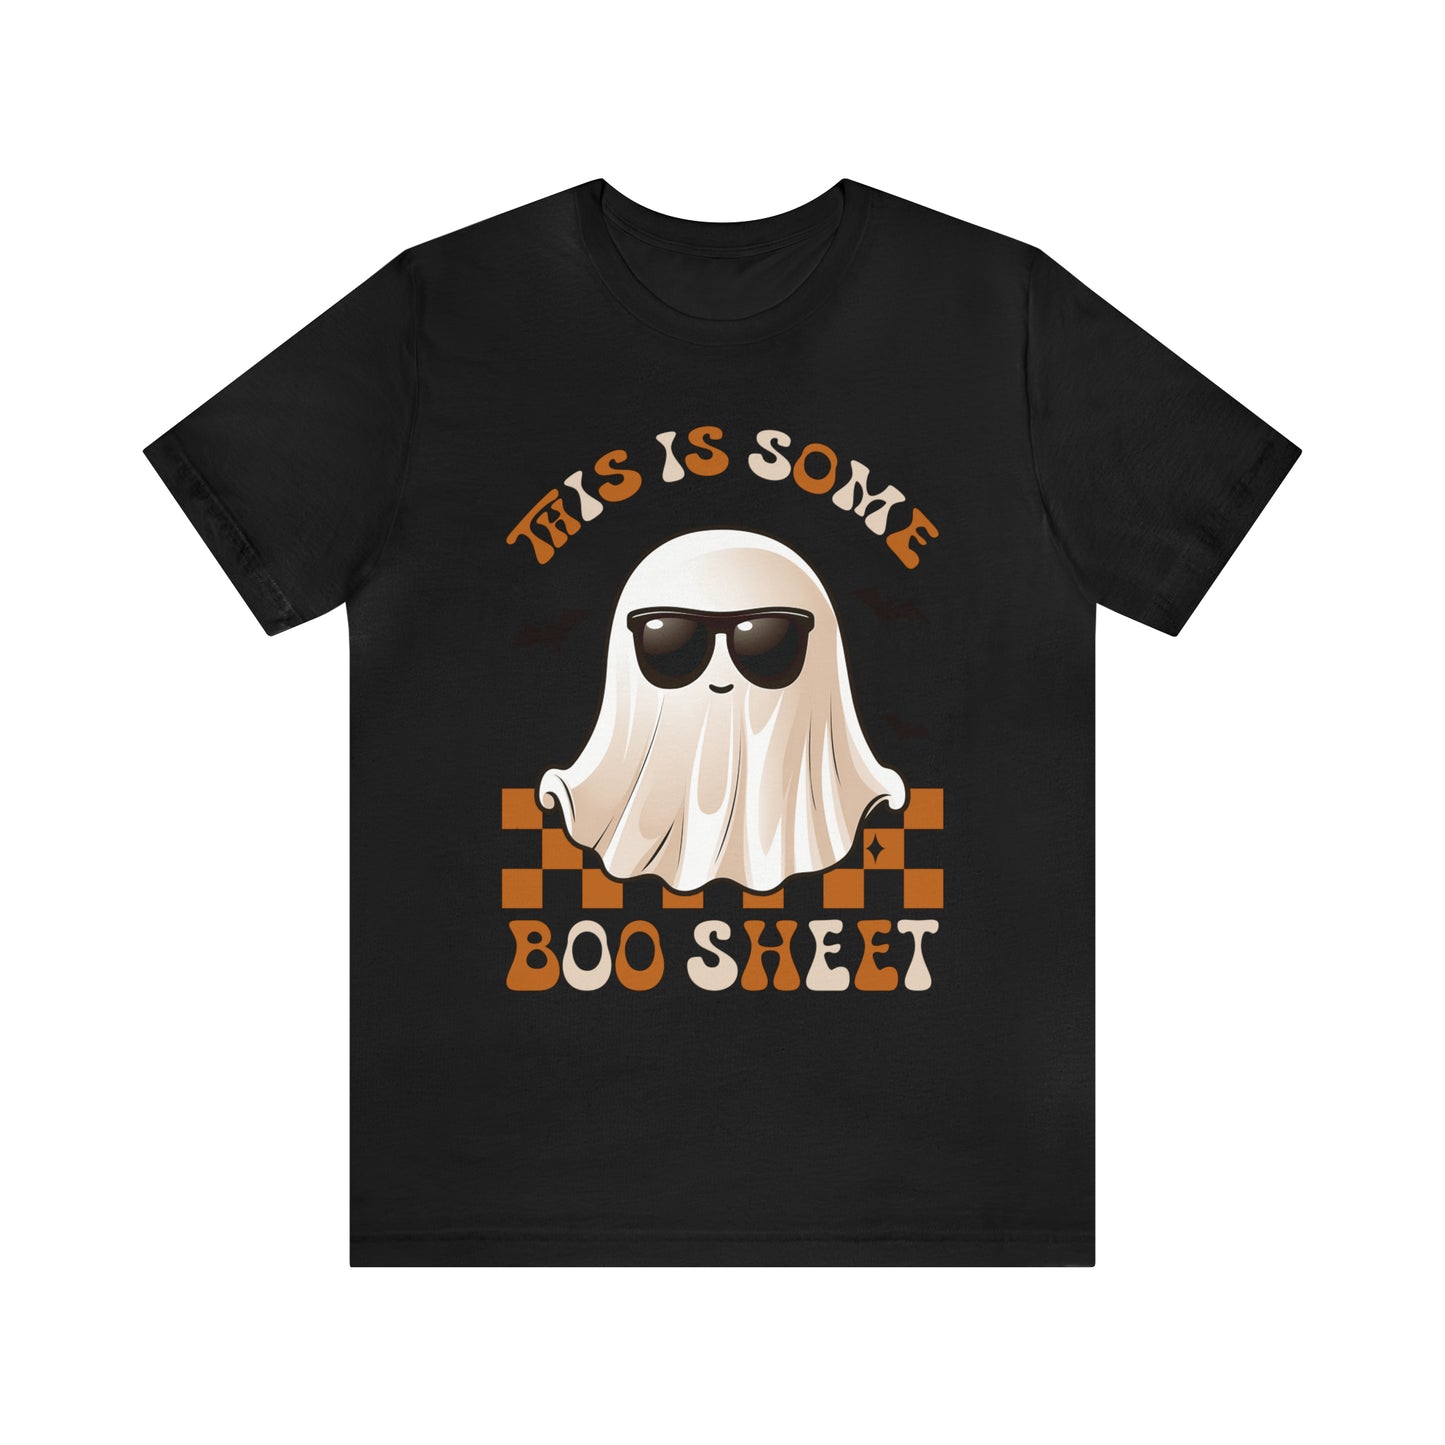 This Is Some Boo Sheet shirt, Boo Sheet Shirt, Spooky Season Tee, Retro Halloween Kids Shirt, Funny Halloween Ghost Shirt, T657